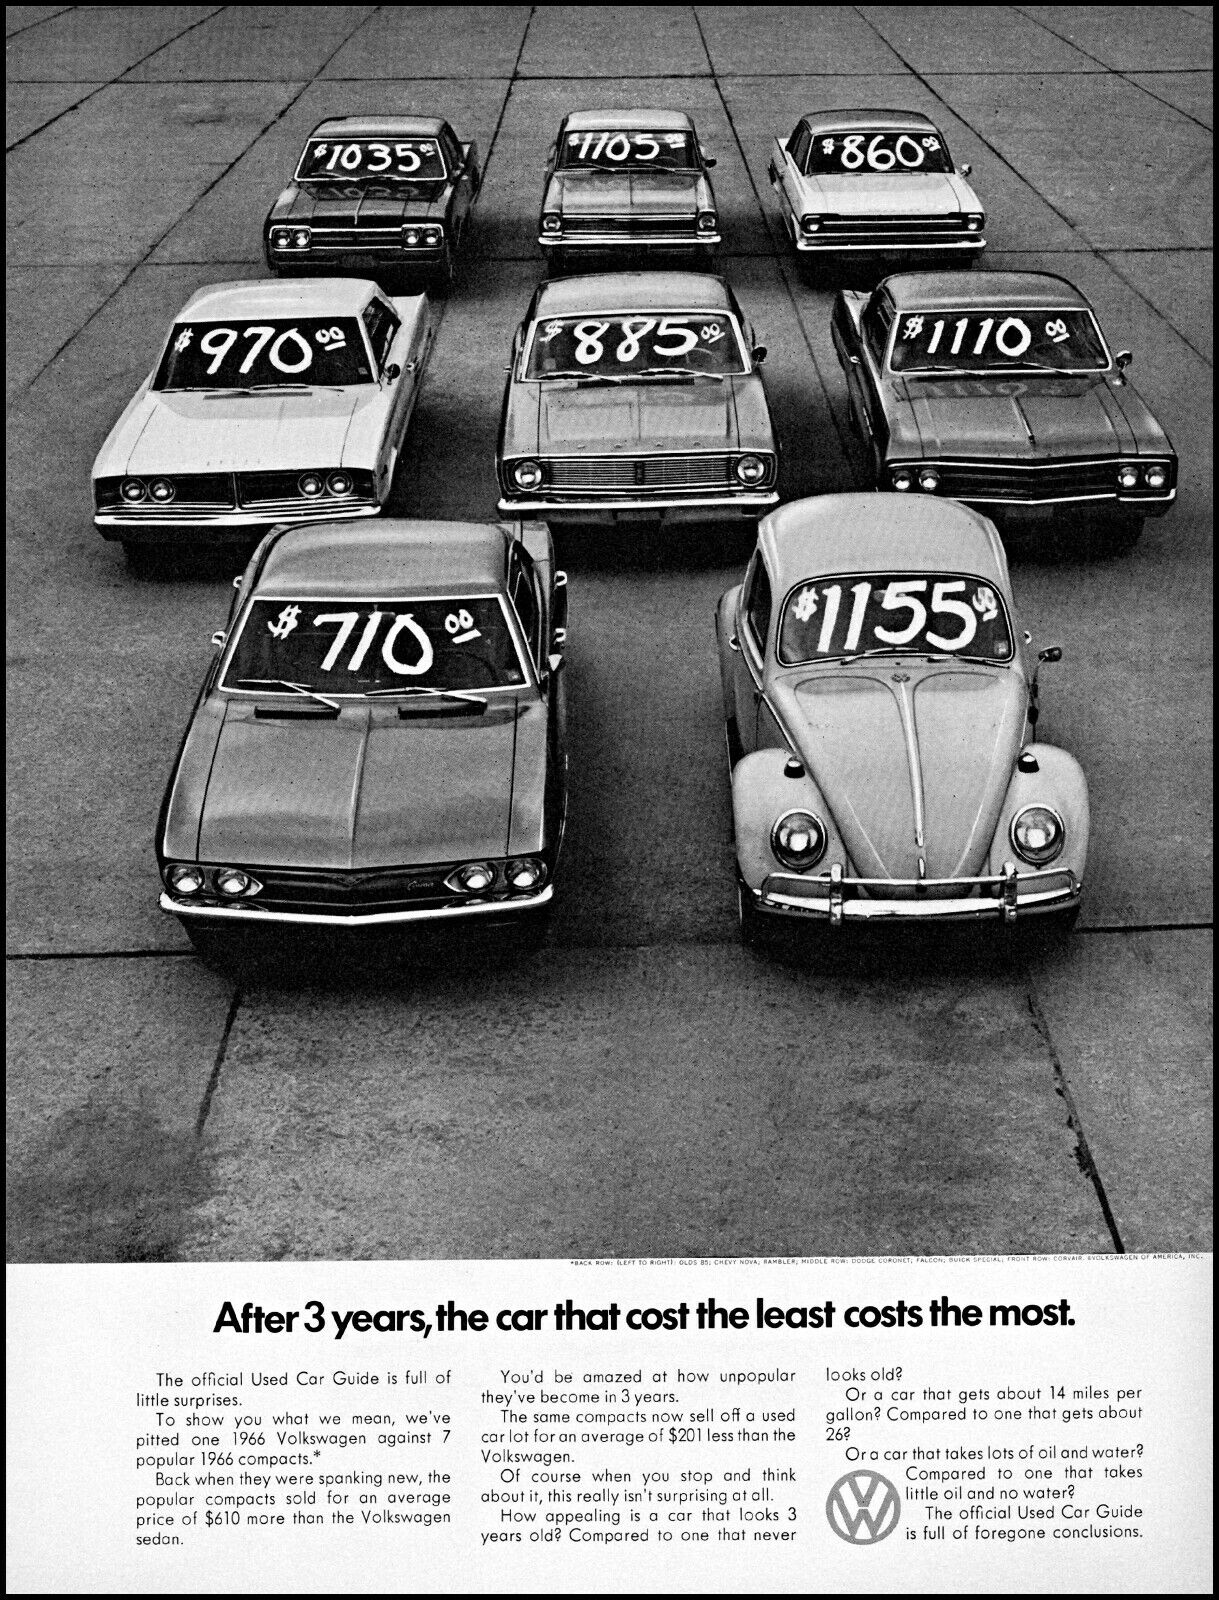 1969 VW Volkswagen 1966 value used car lot comparison retro photo print Ad adL95